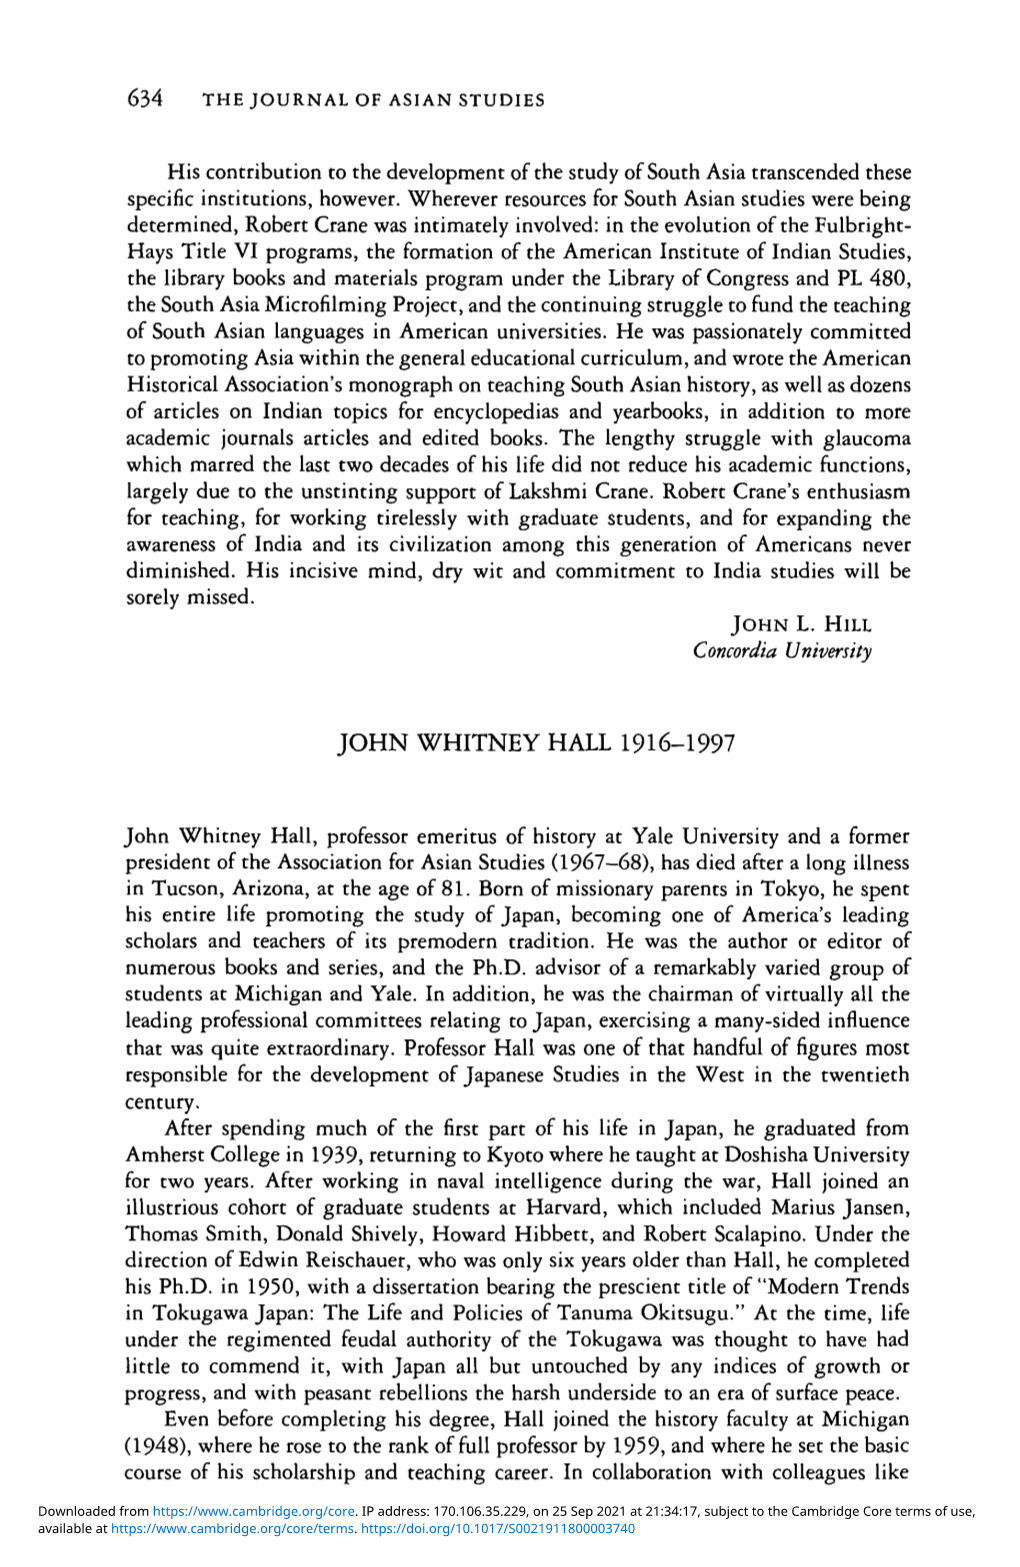 John Whitney Hall 1916-1997